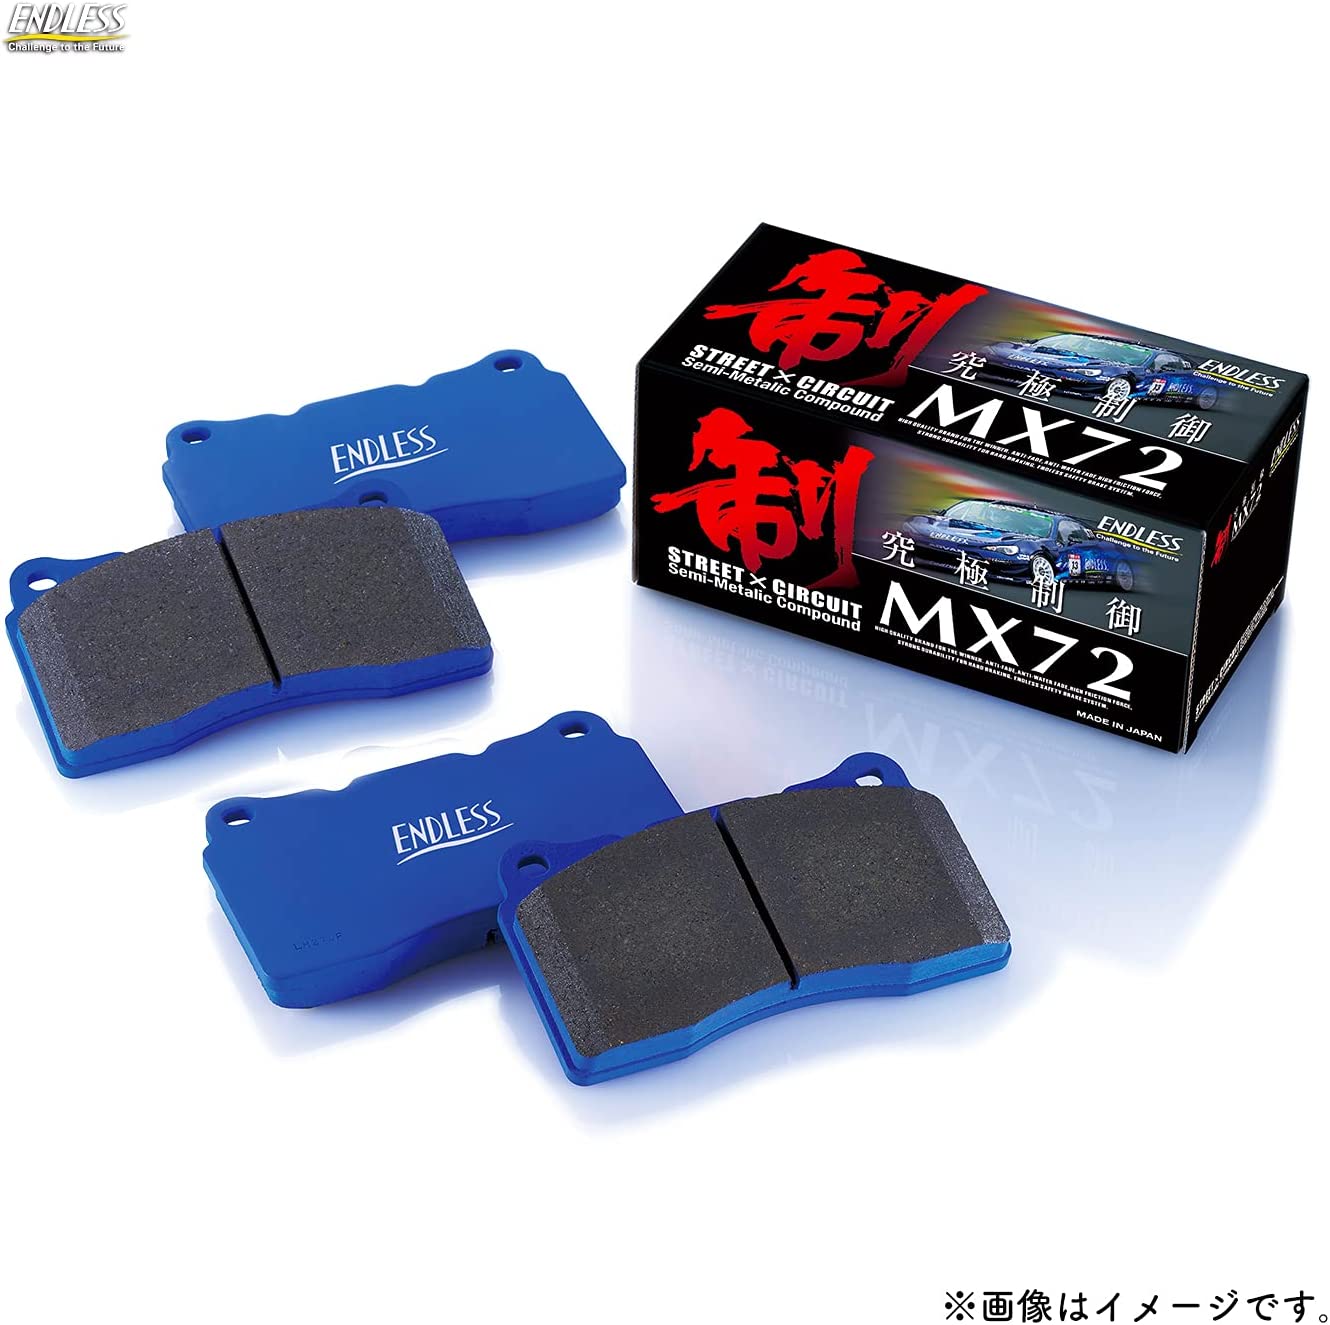 ENDLESS MX72 BRAKE PAD FRONT REAR SET FOR MAZDA CX-5 KFEP KF2P KF5P EP492-EP520-MX72